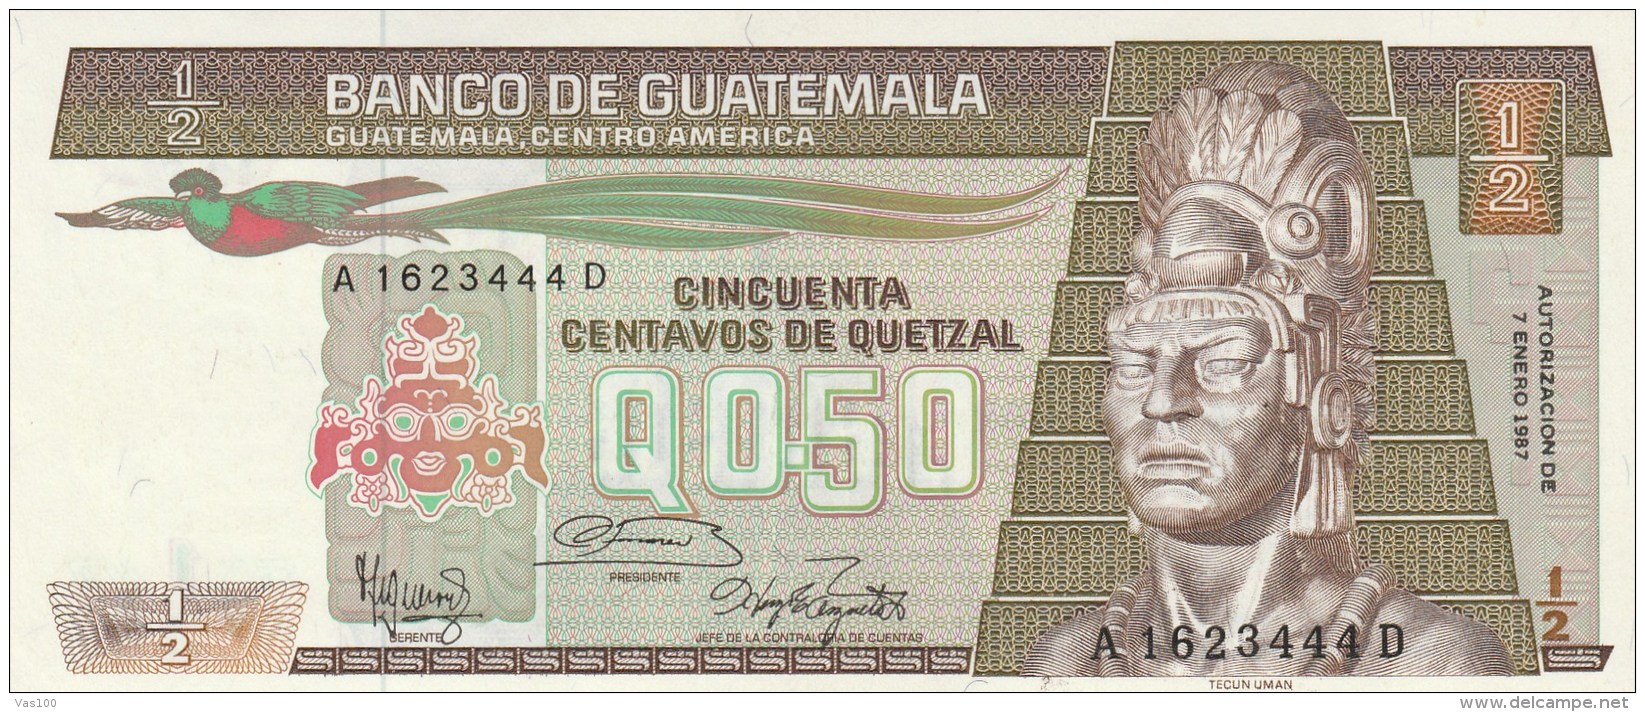 Q 0.50, CINCUENTA CENTAVOS DE QUETZAL, 1987, UNC, PAPER BANKNOTE, GUATEMALA. - Guatemala